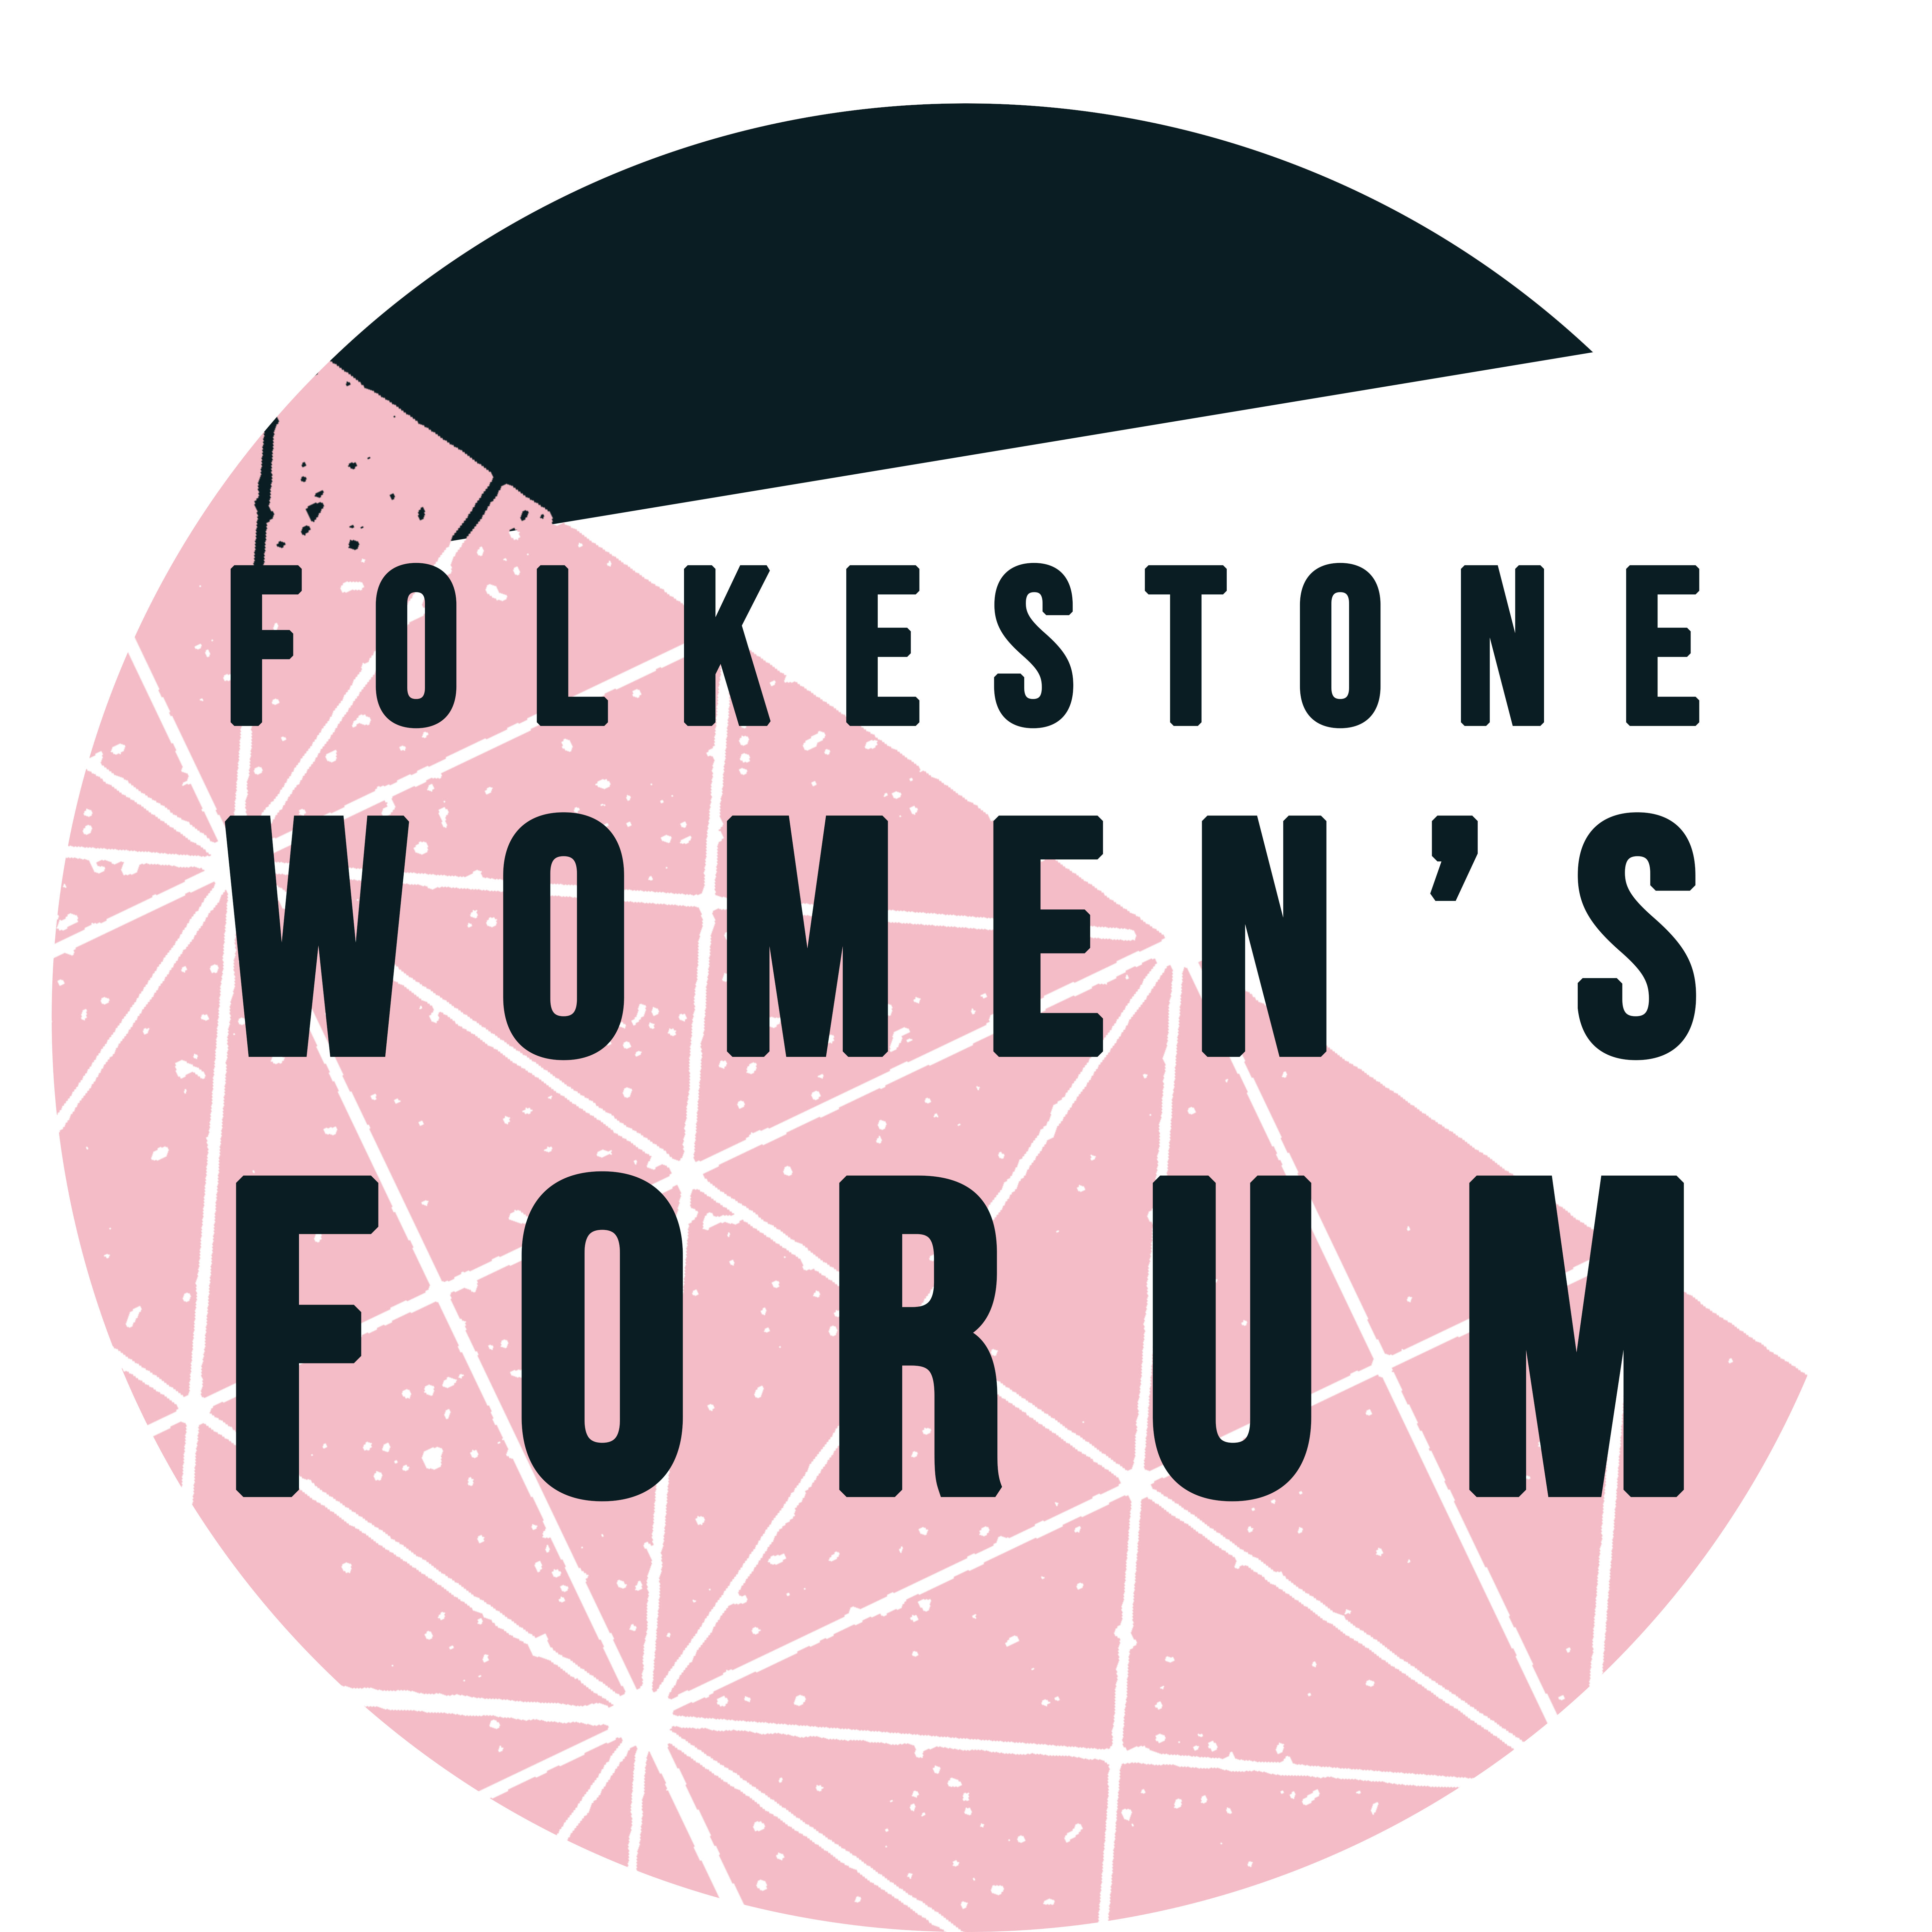 Folkestone Women's Forum